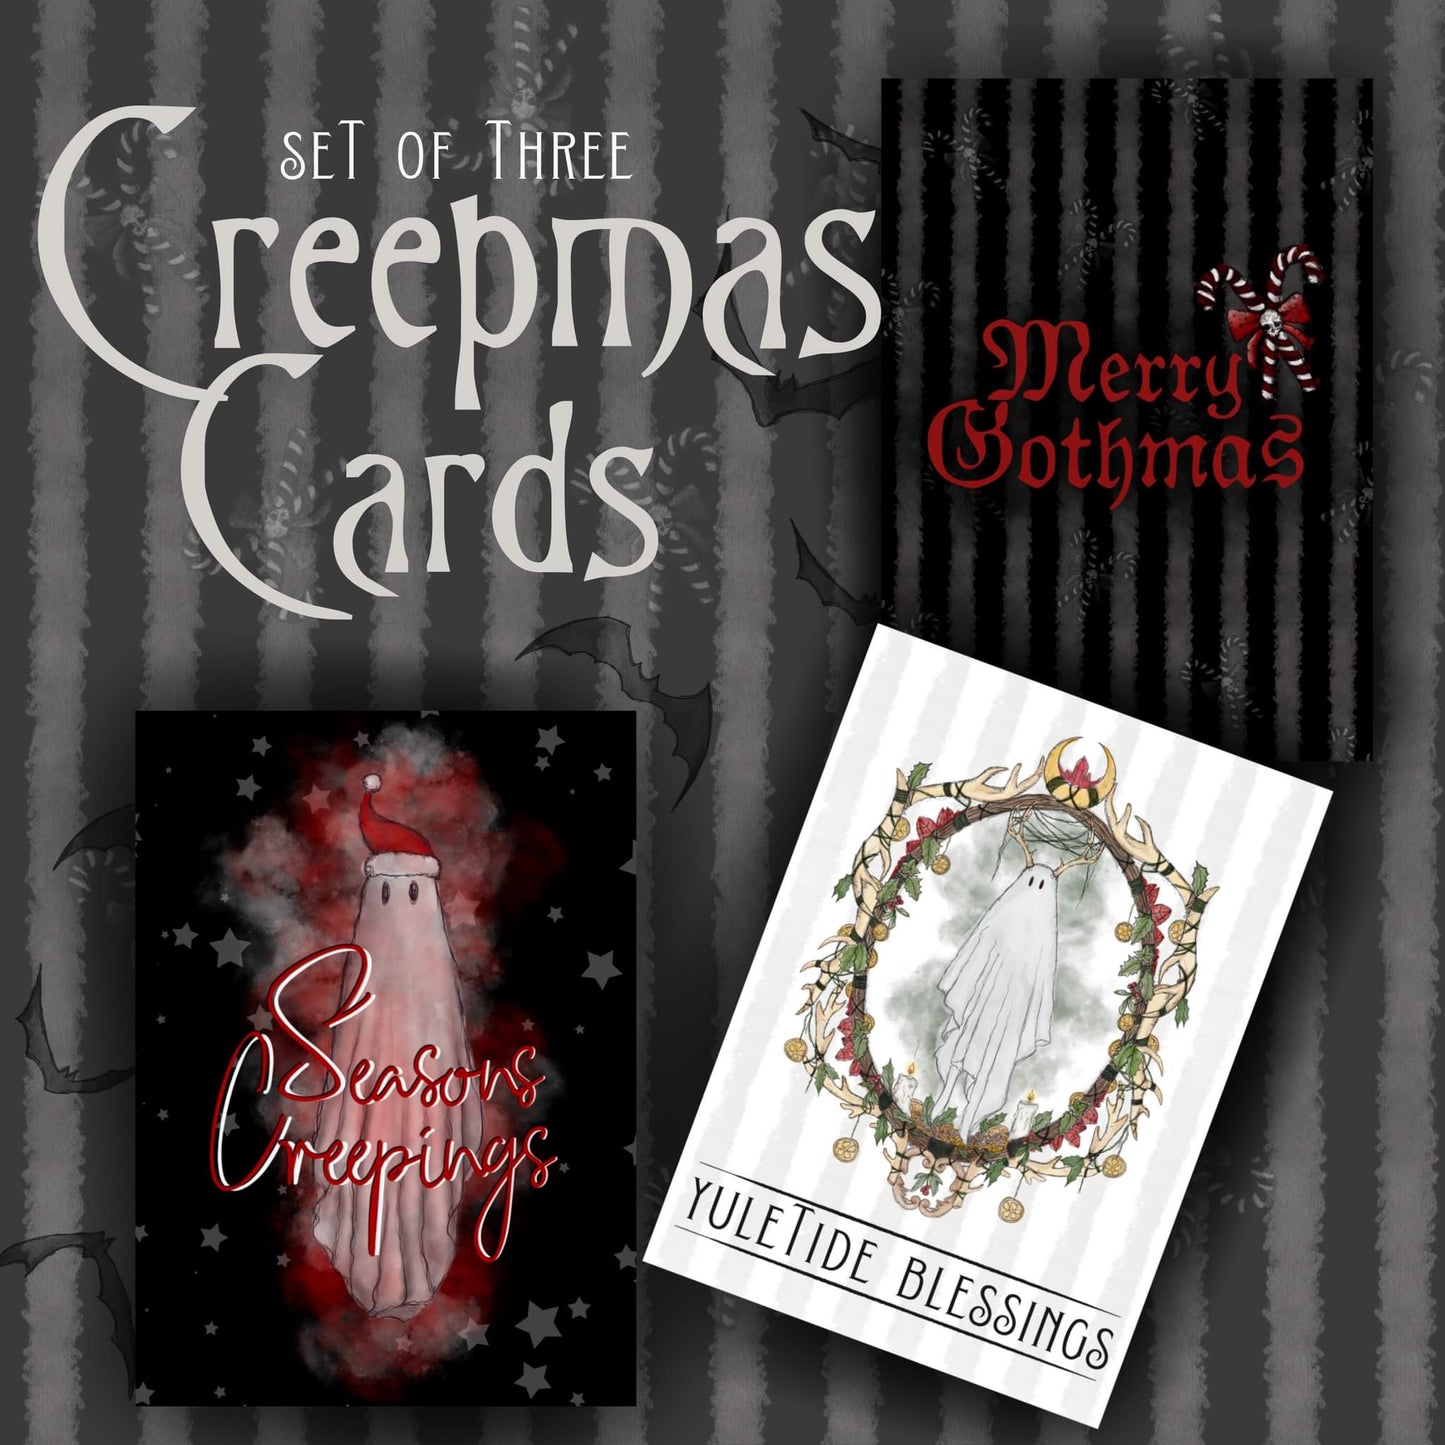 Creepmas Card Set of THREE